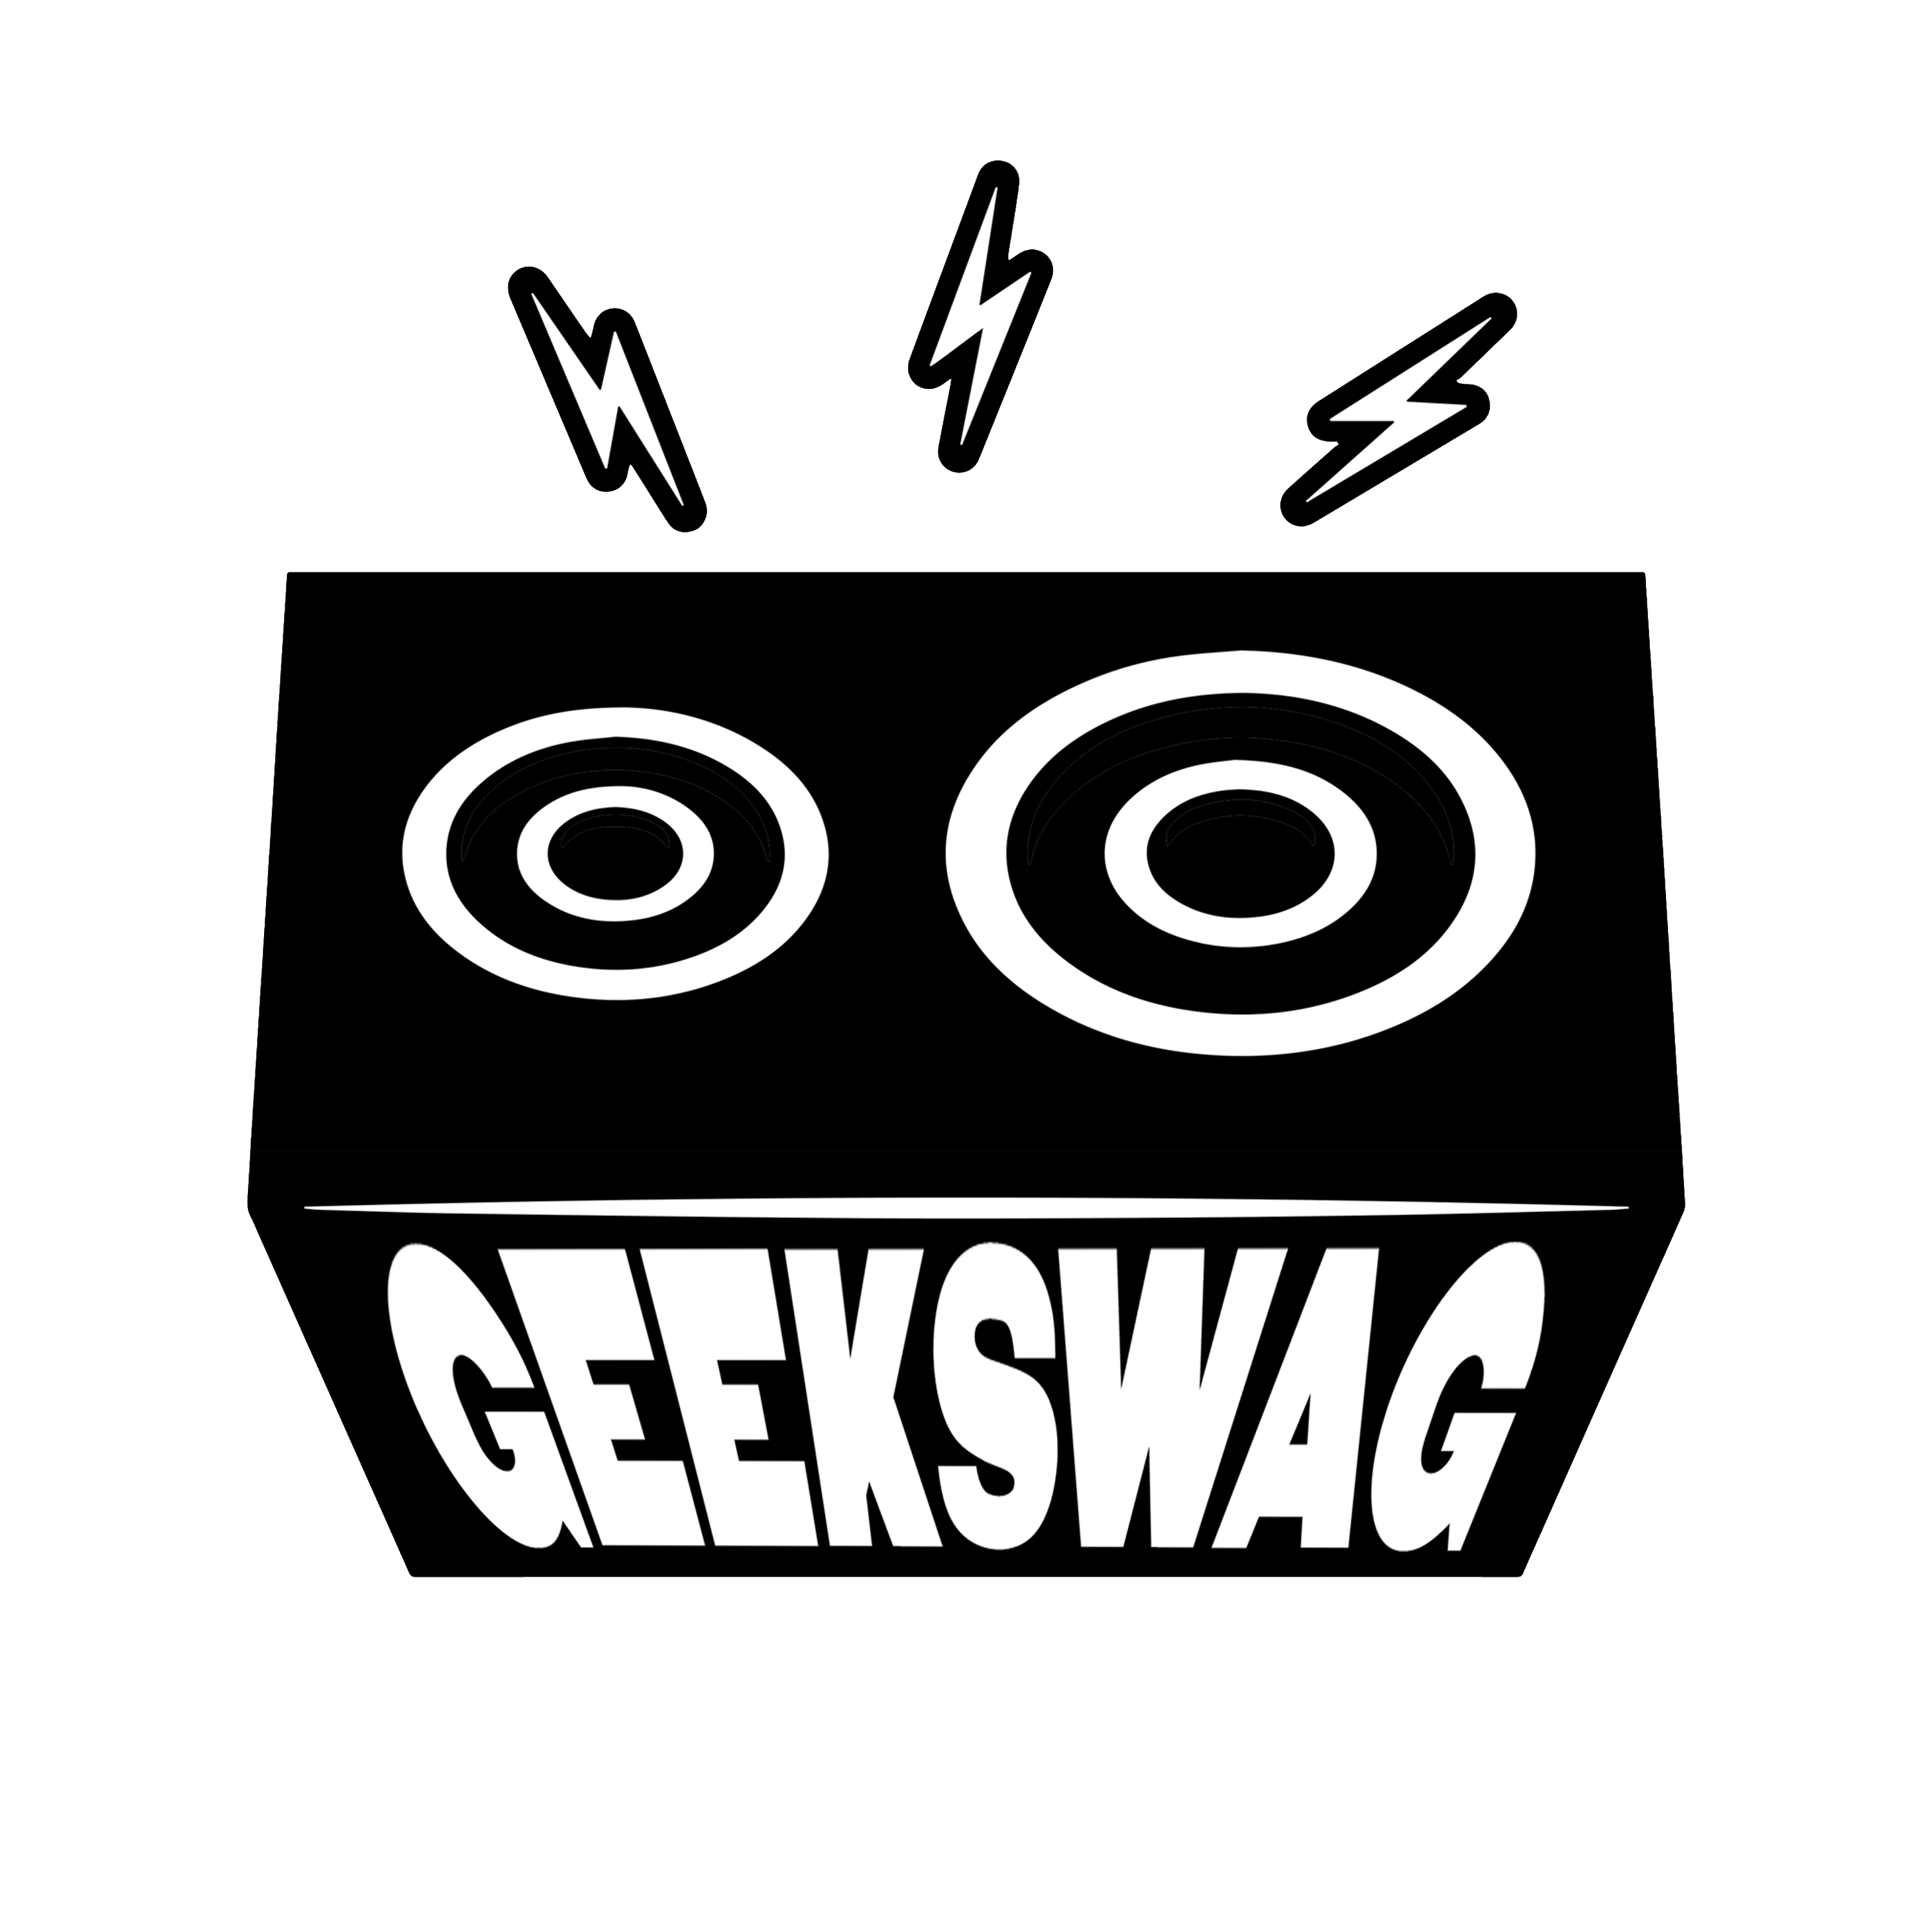 GeekswagMusic